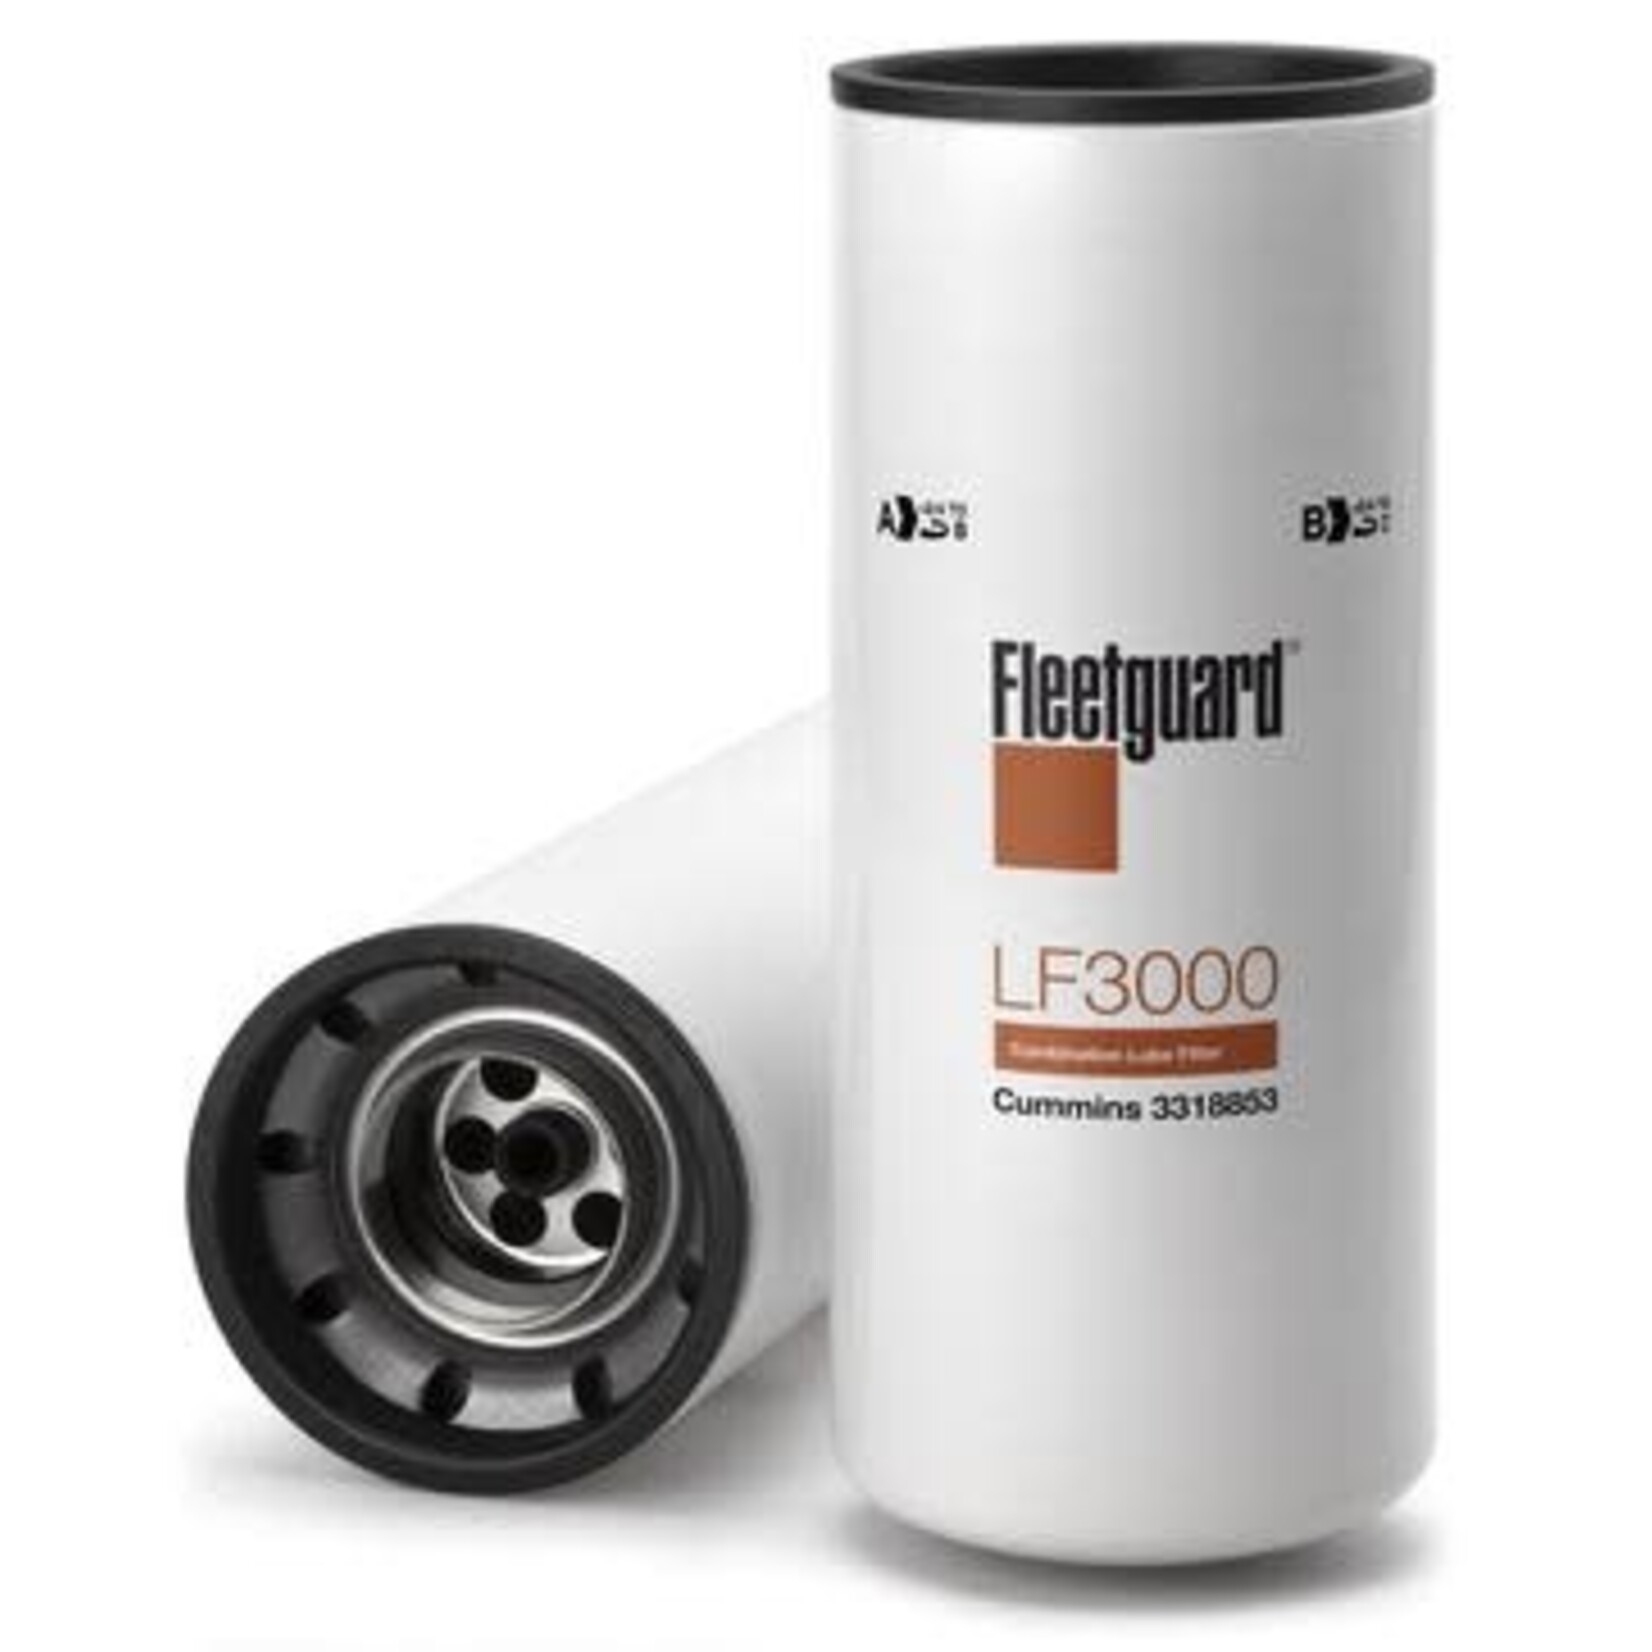 FleetGuard Oil Filter - Fleetguard LF3000 / Luberfiner LFP3000